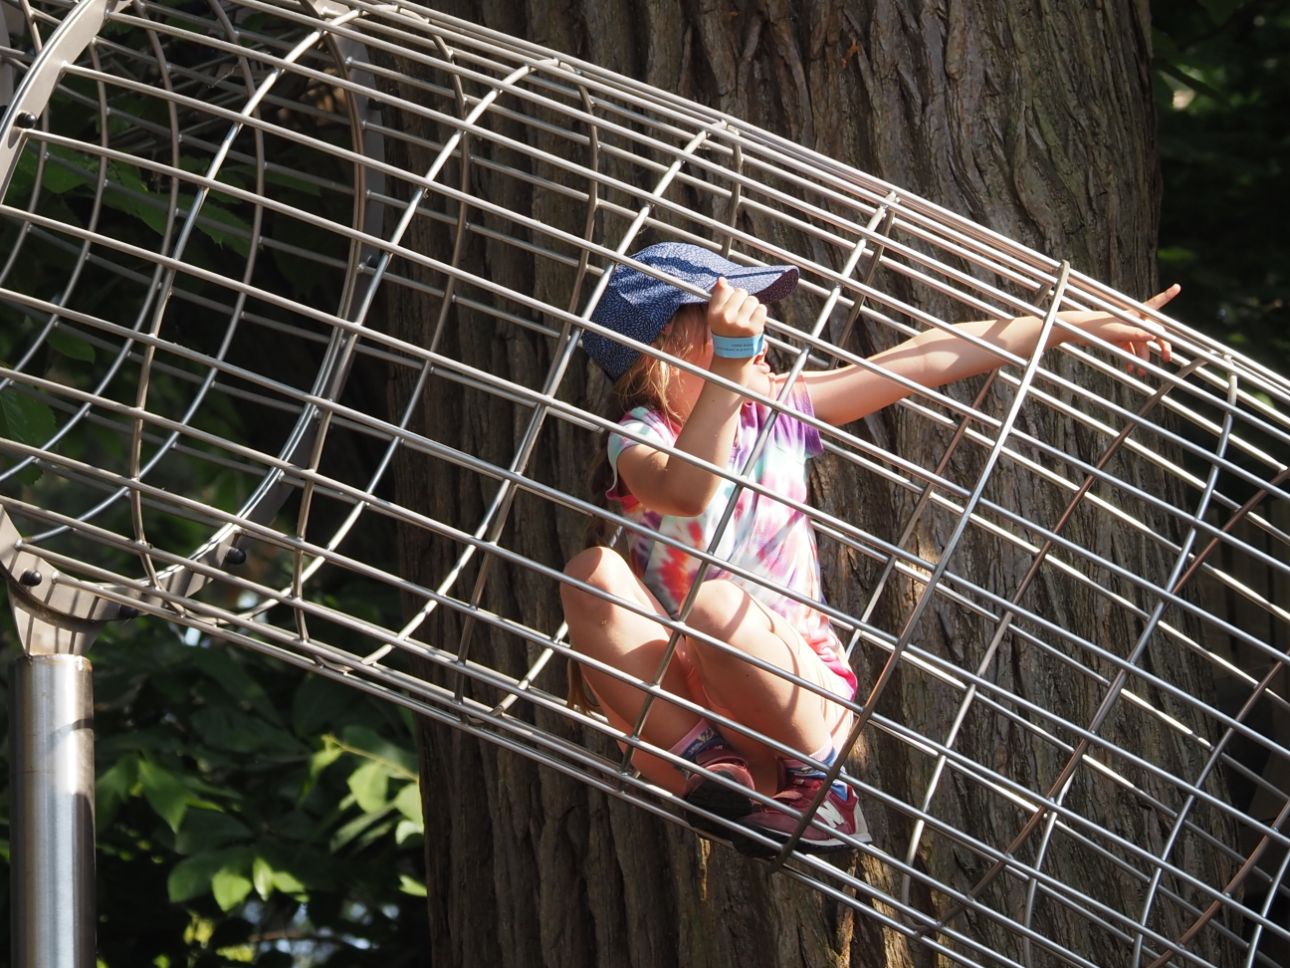 Young child climbing through a metal frame.